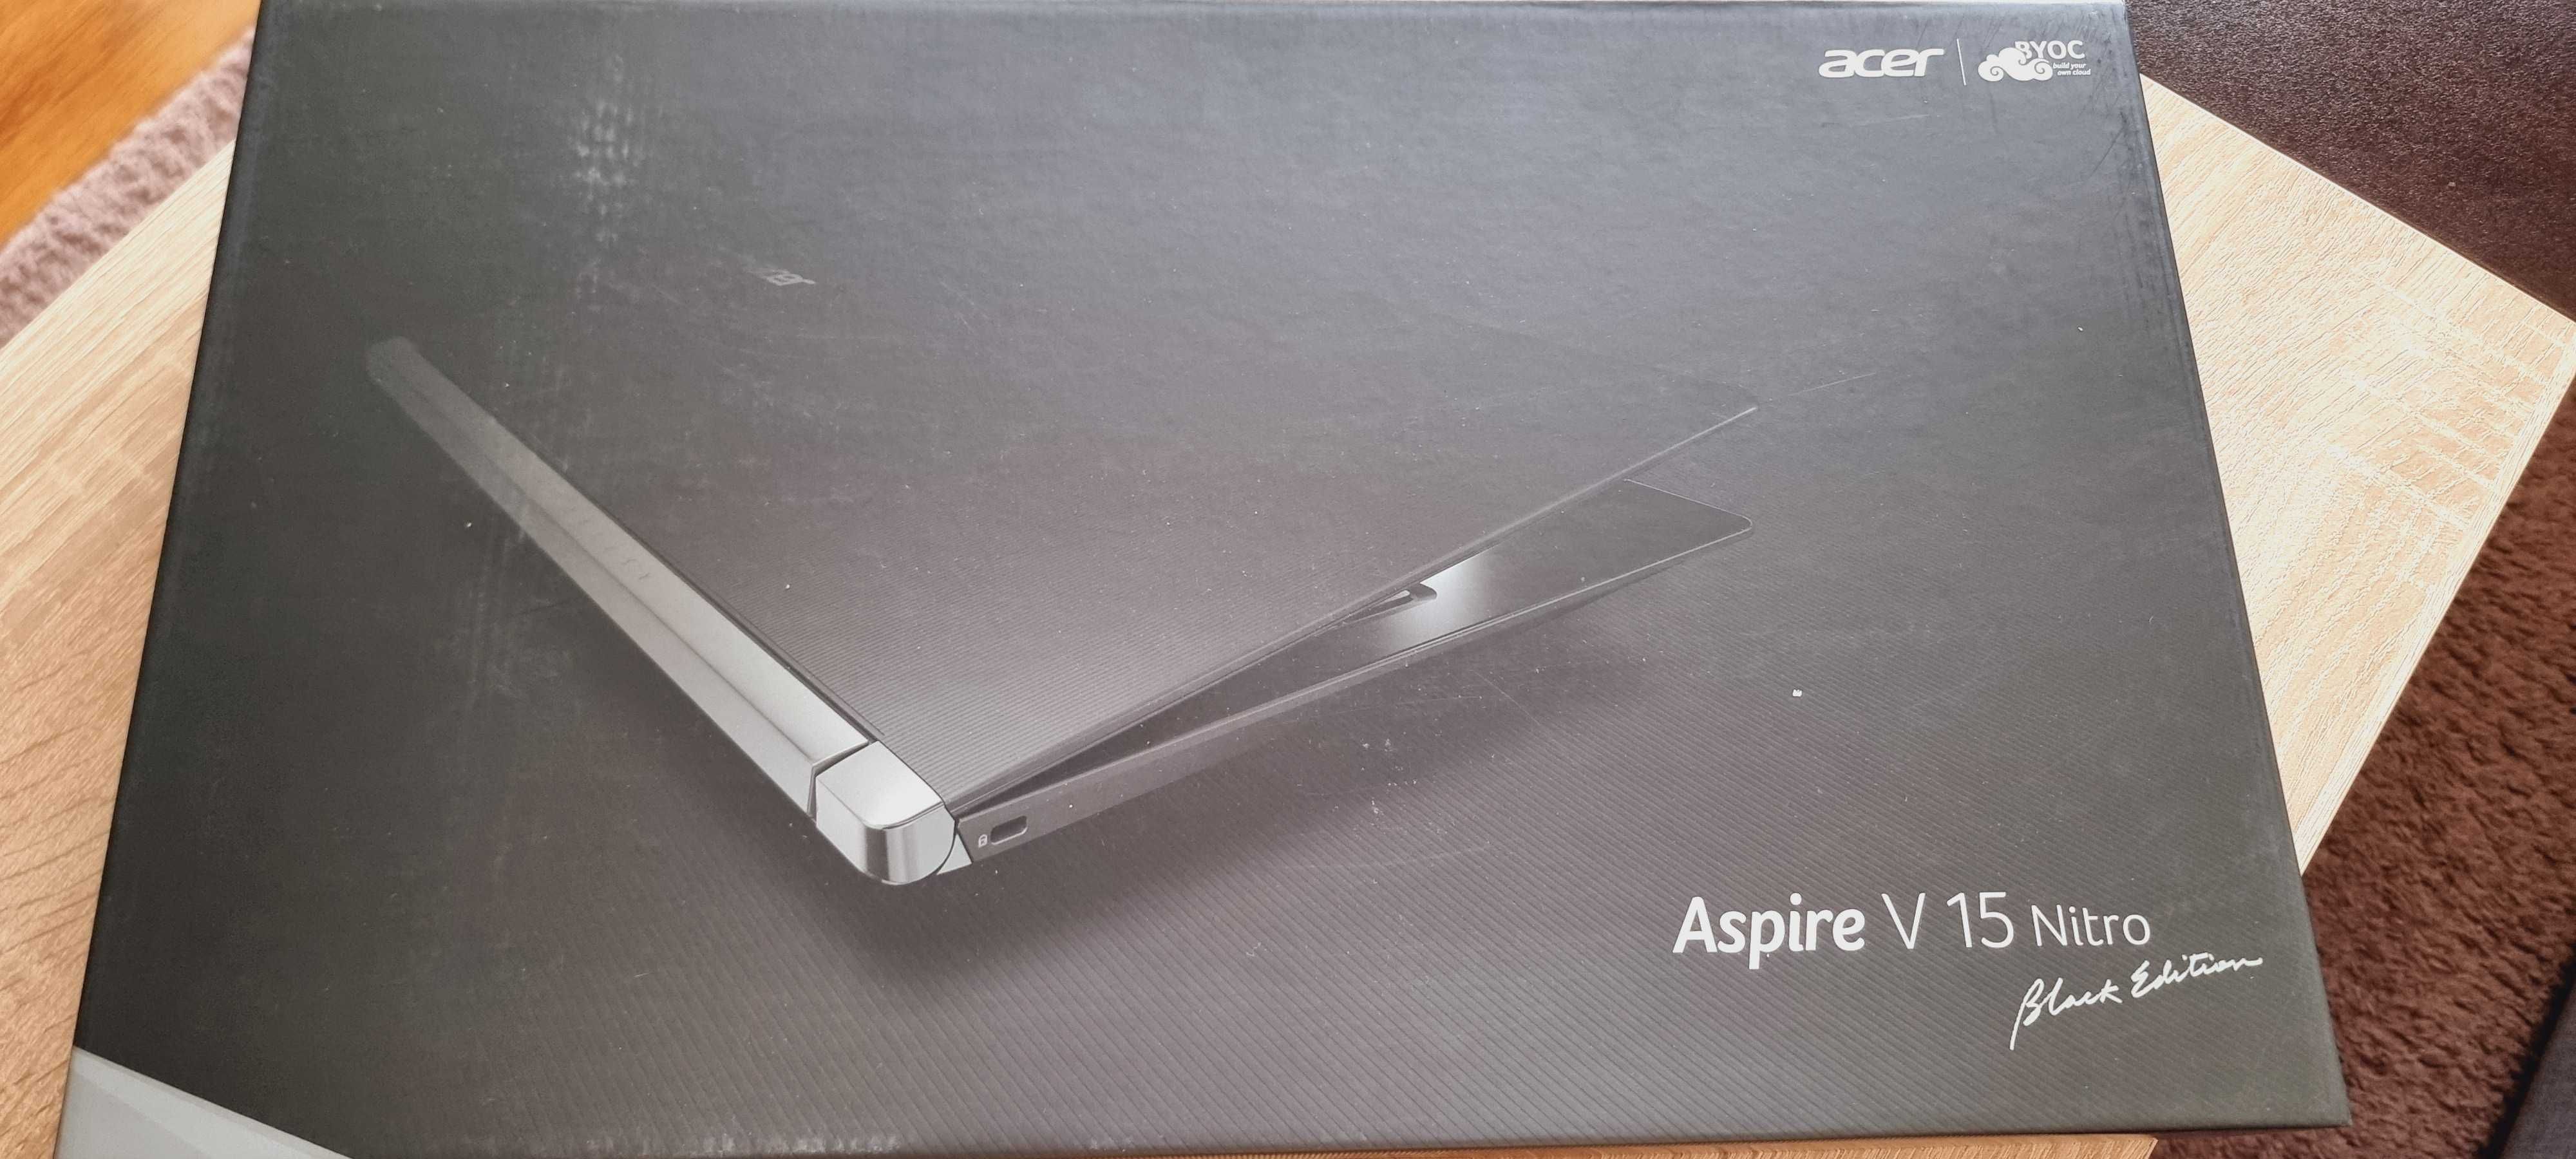 Лаптоп Acer Aspire V15 Nitro Black Edition